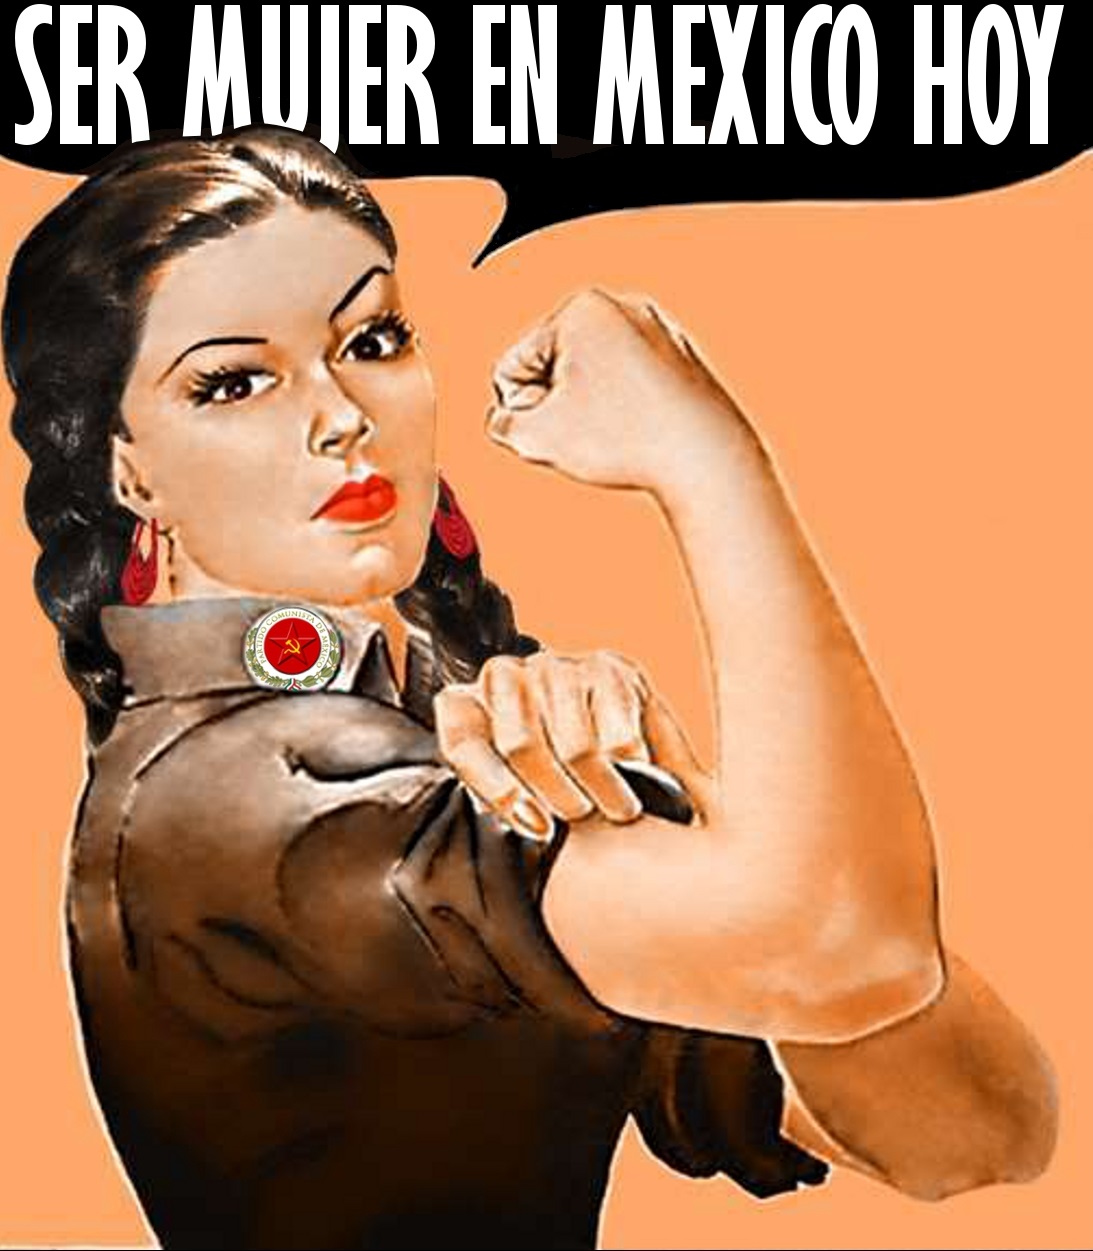 Ser mujer en México